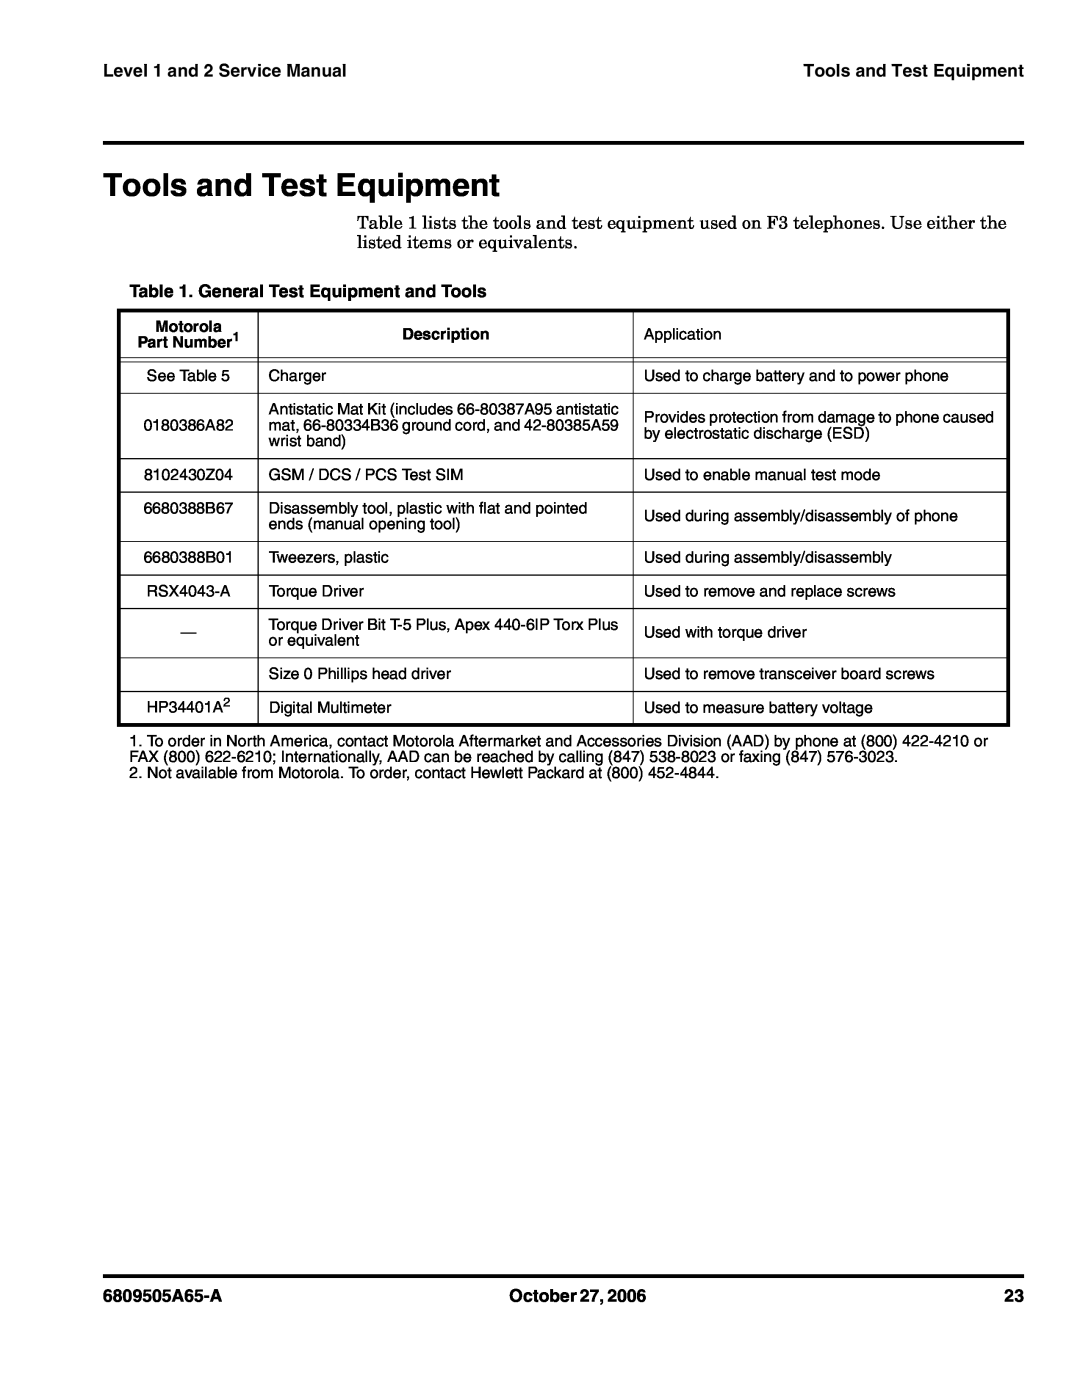 Motorola F3 Tools and Test Equipment, General Test Equipment and Tools, Level 1 and 2 Service Manual, 6809505A65-A 